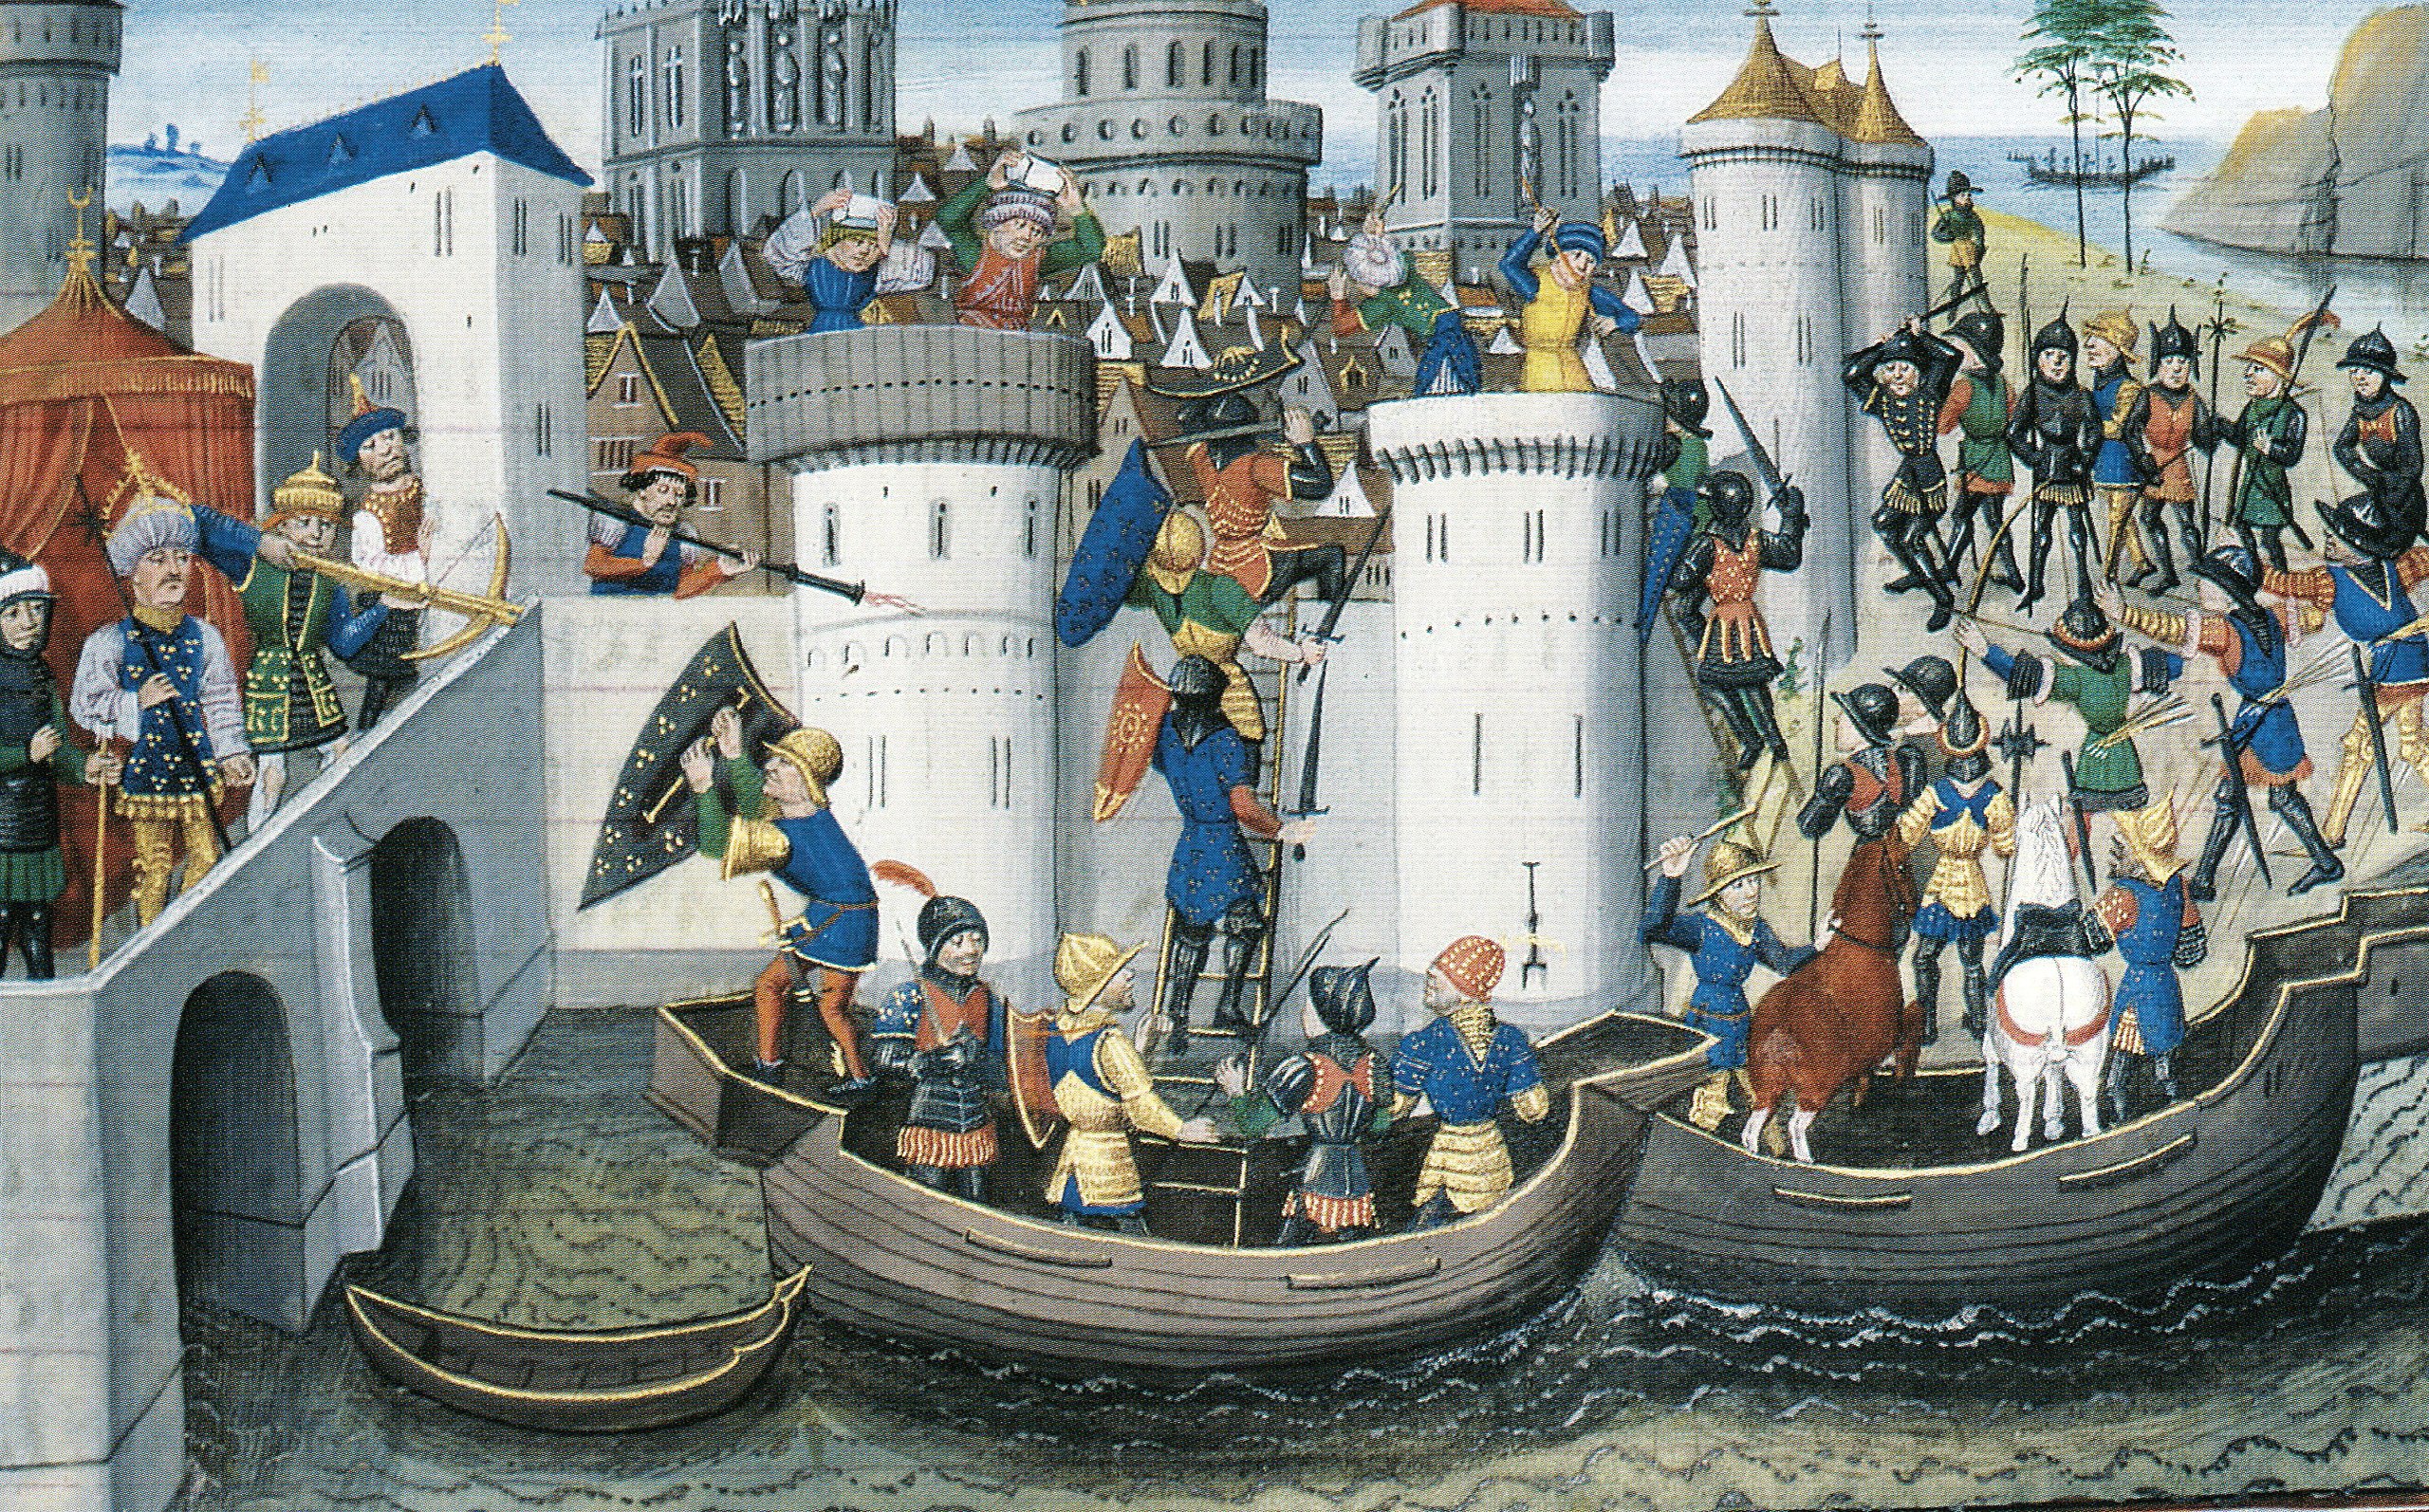 Crusades depiction